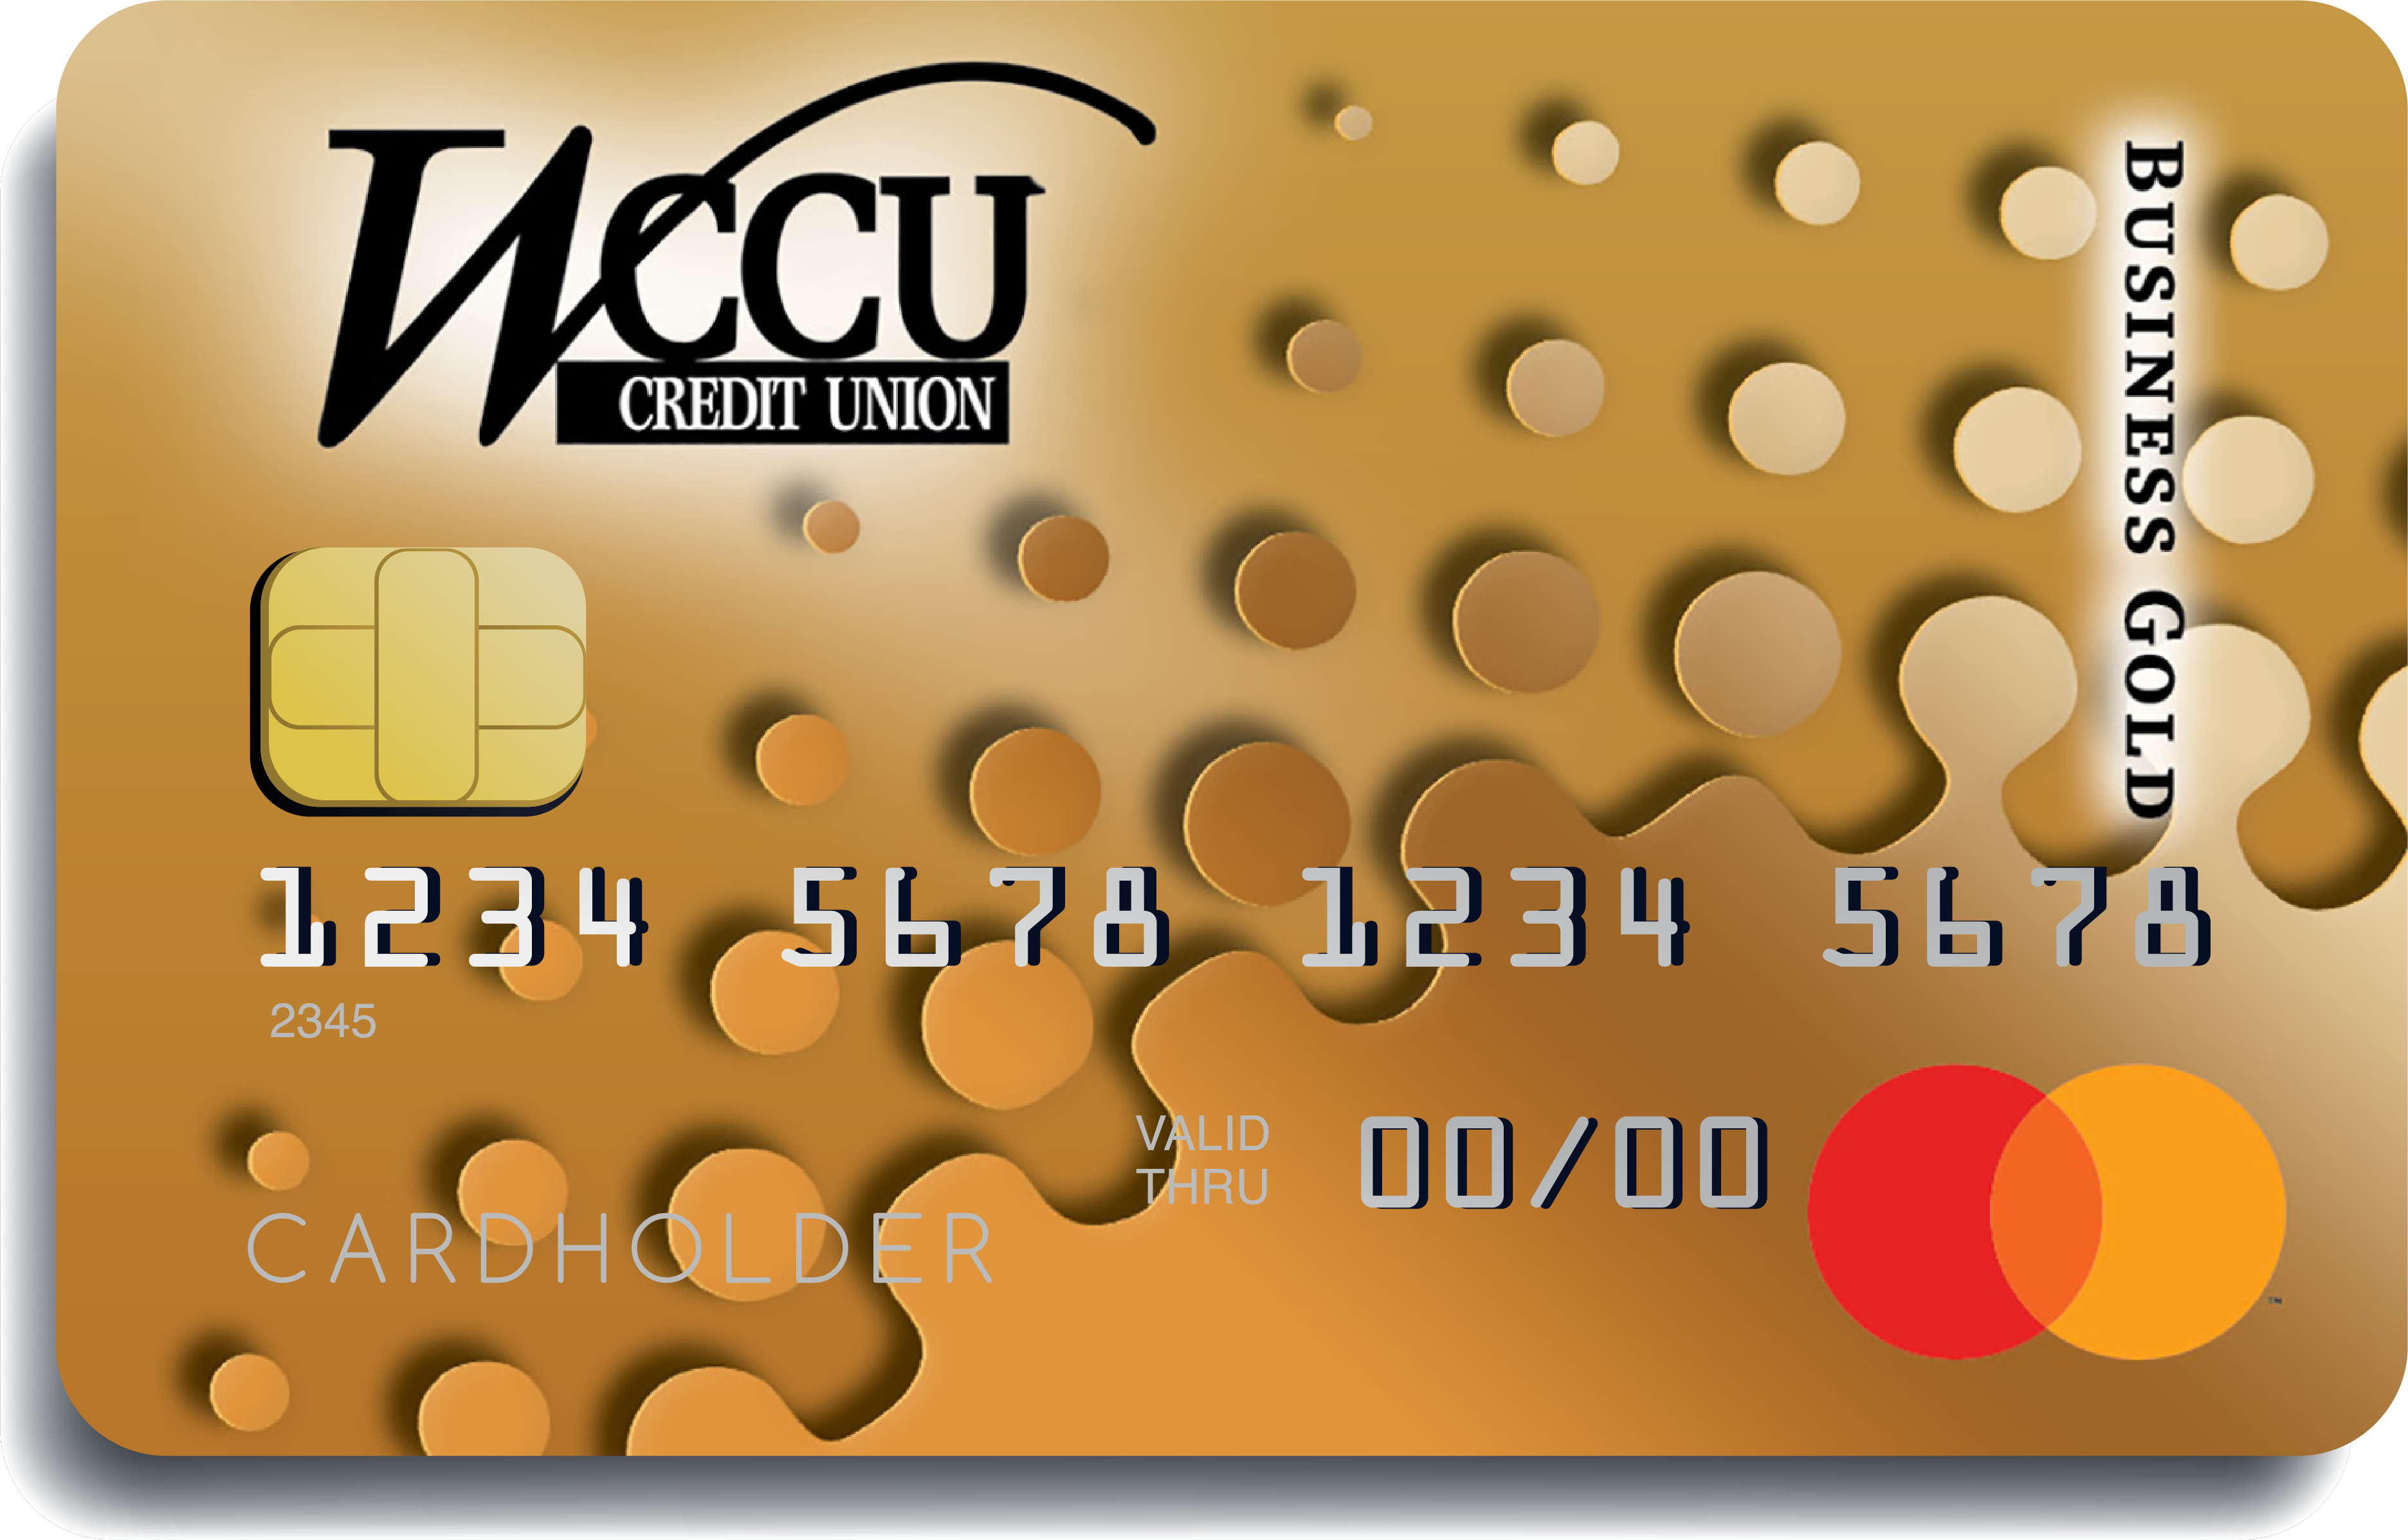 WCCU Business Gold MasterCard Credit Card